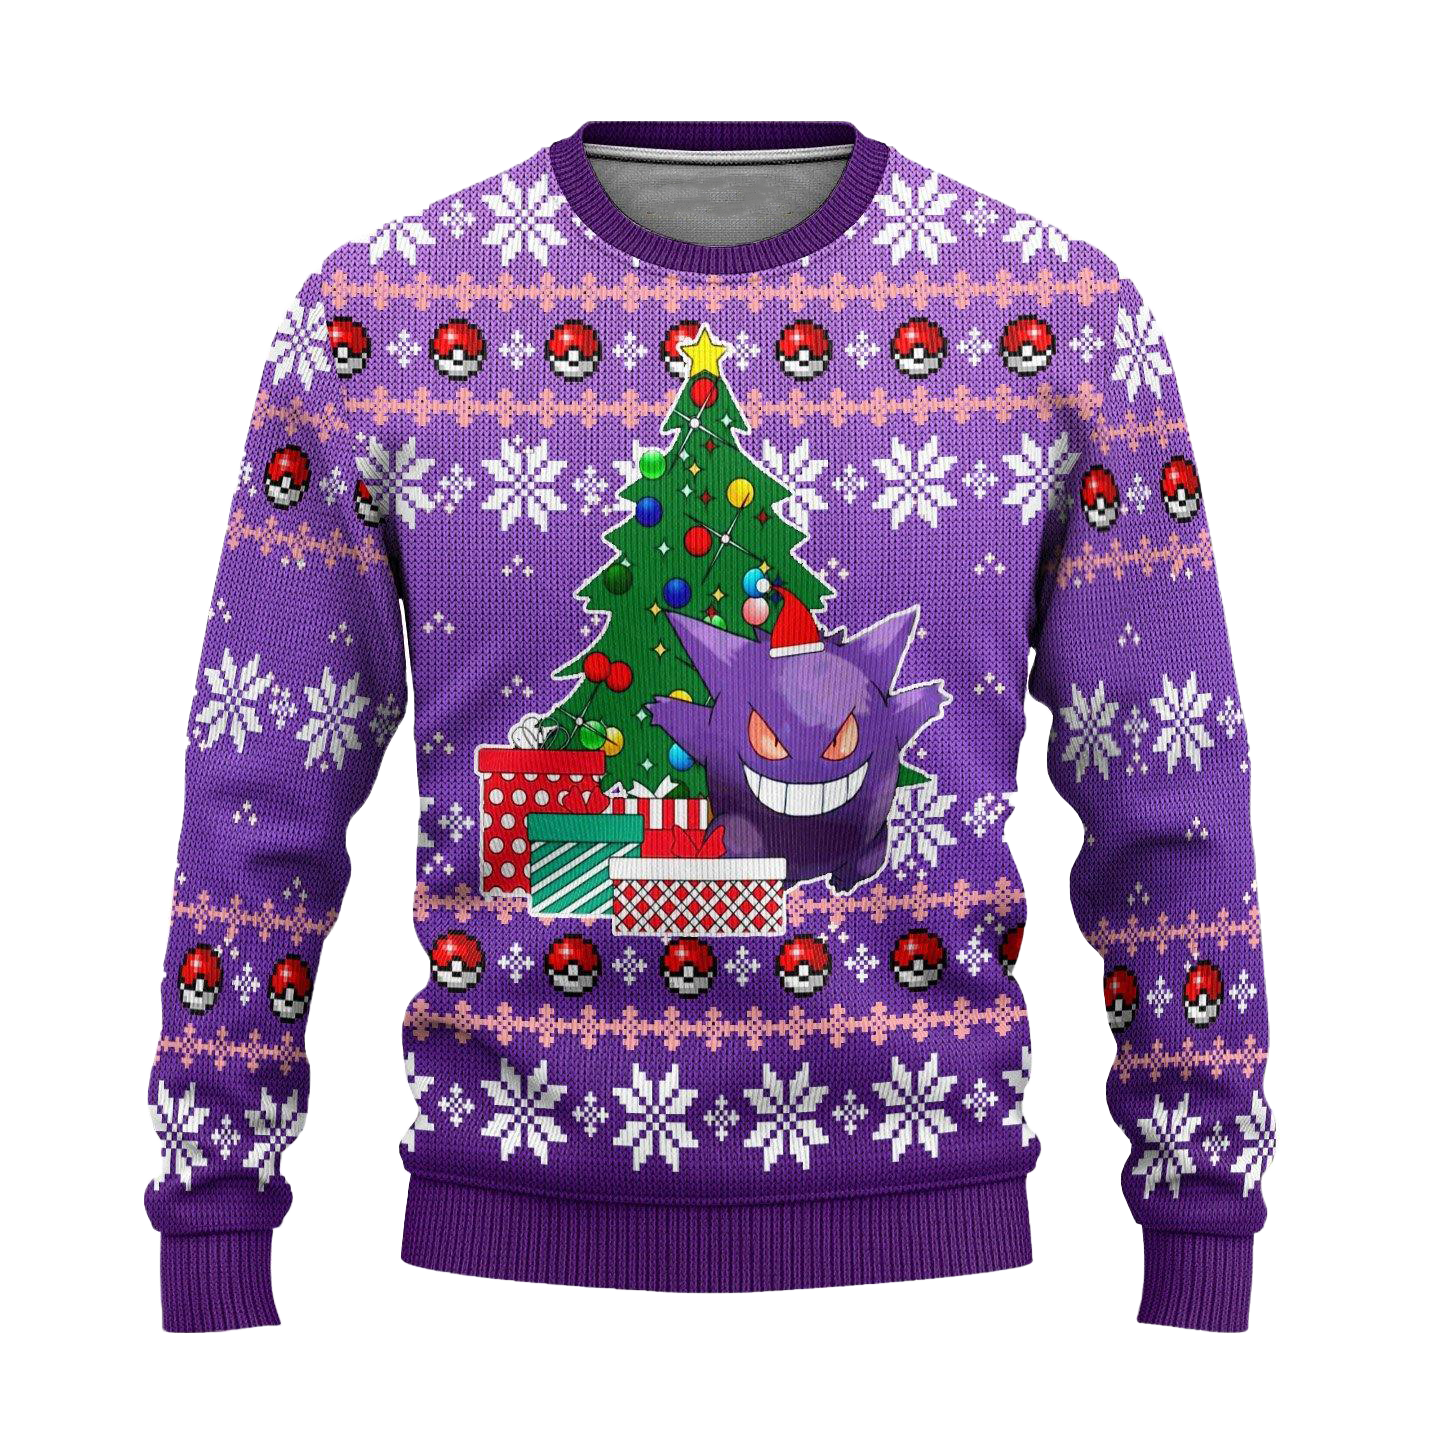 Pokemon Gengar Anime Ugly Christmas Sweater Xmas Gift